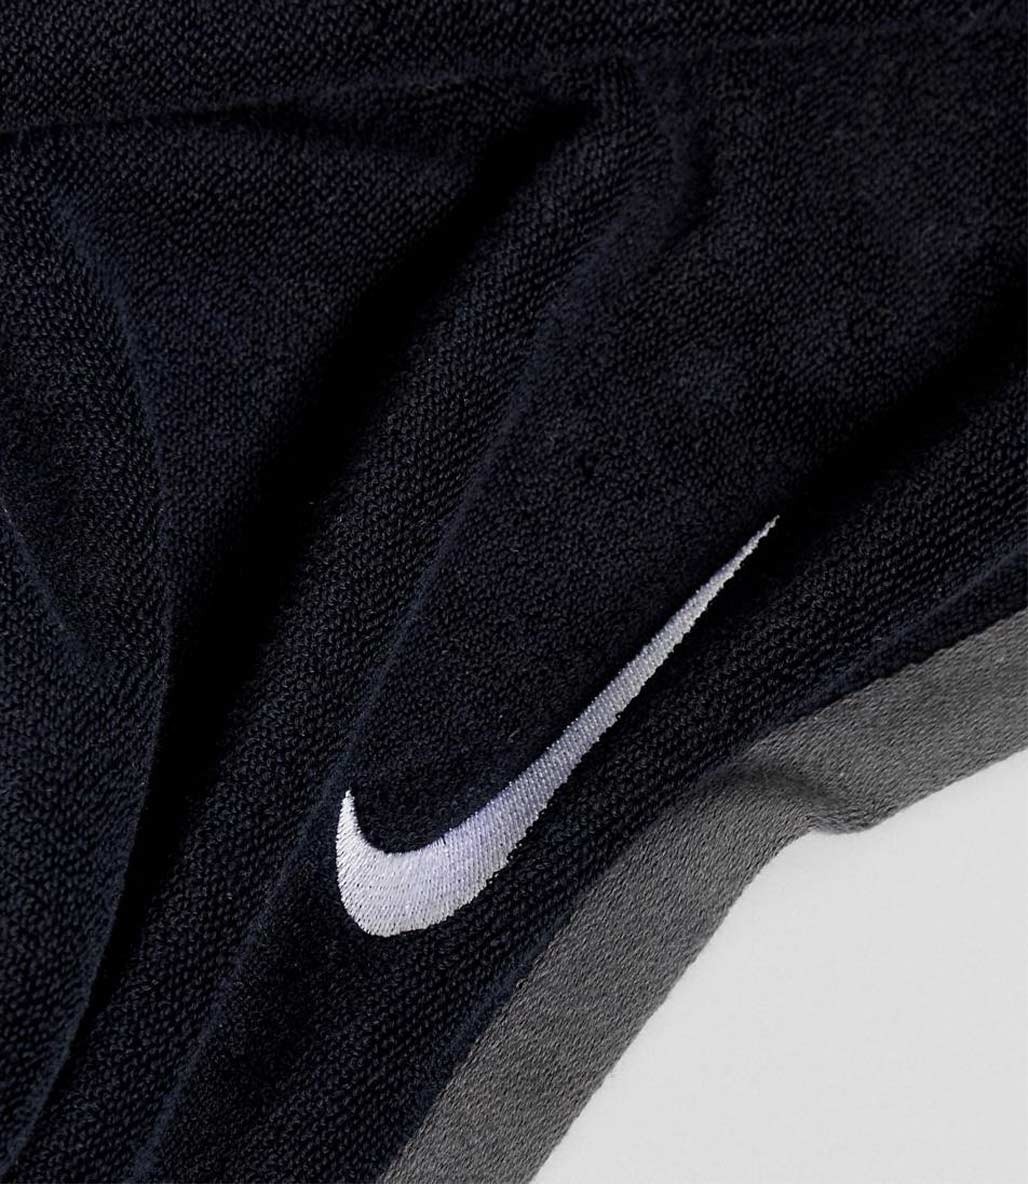 Nike Fundamental Towel Havlu Large Siyah